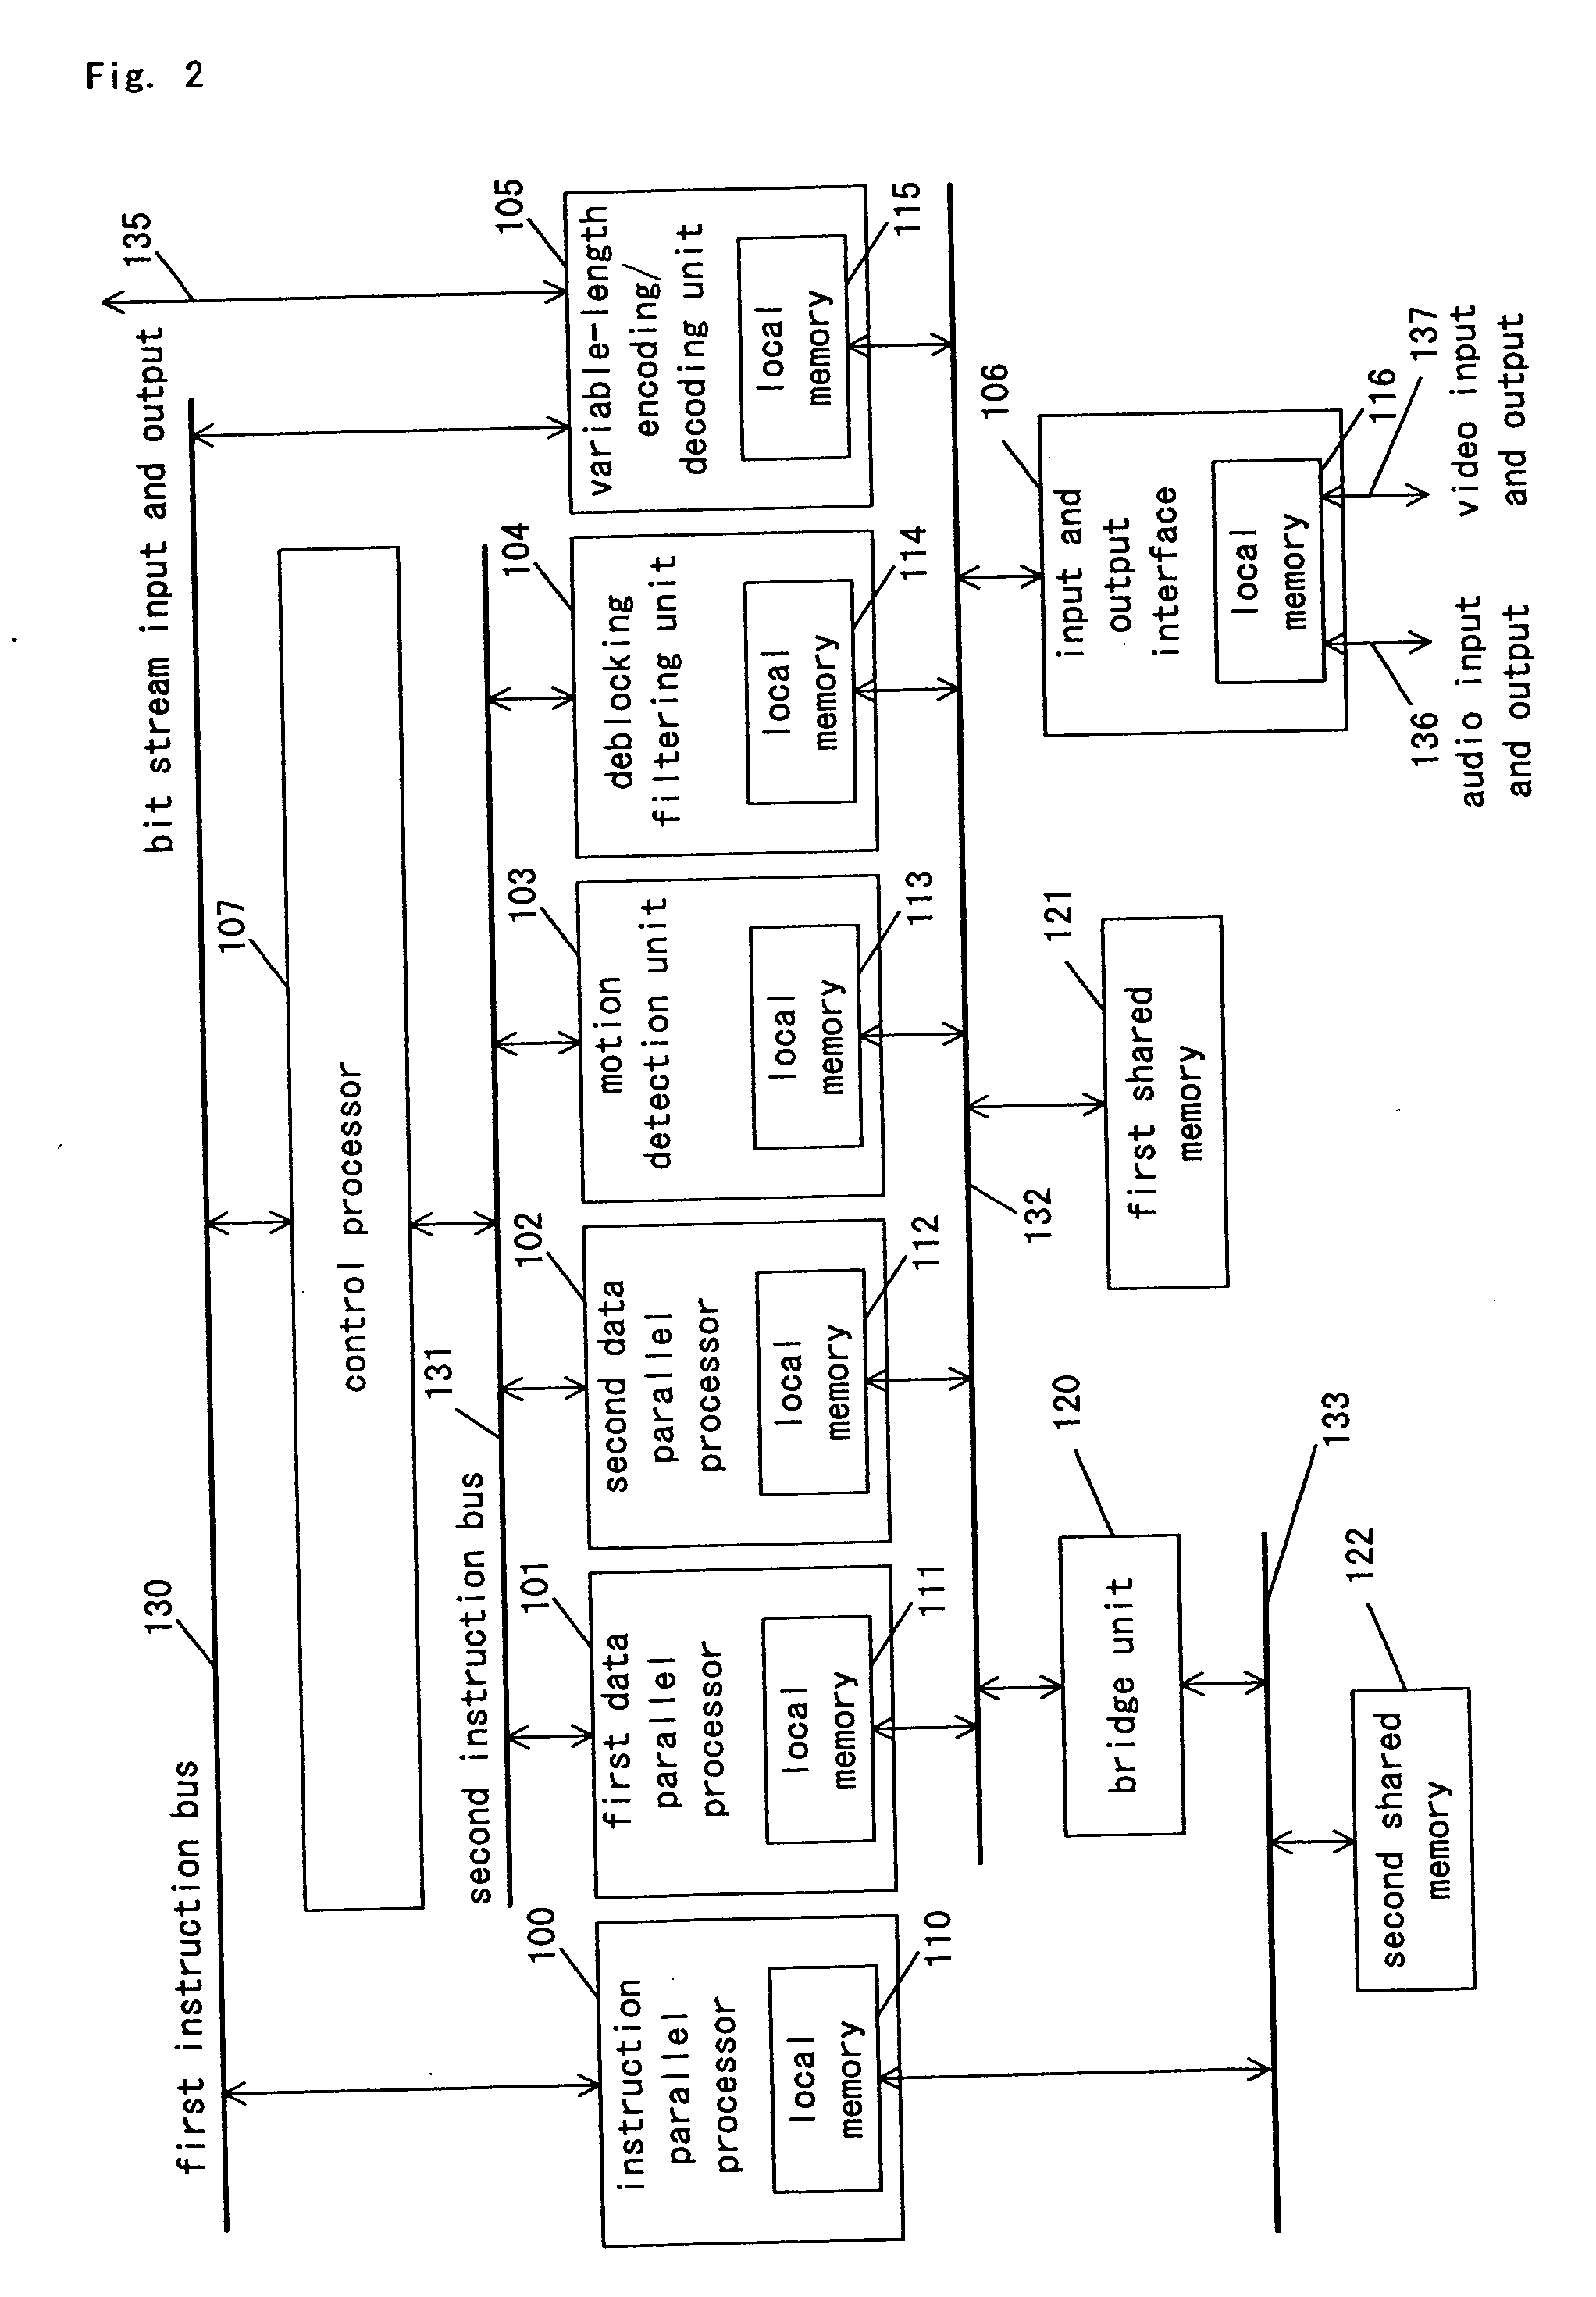 Signal-processing apparatus and electronic apparatus using same